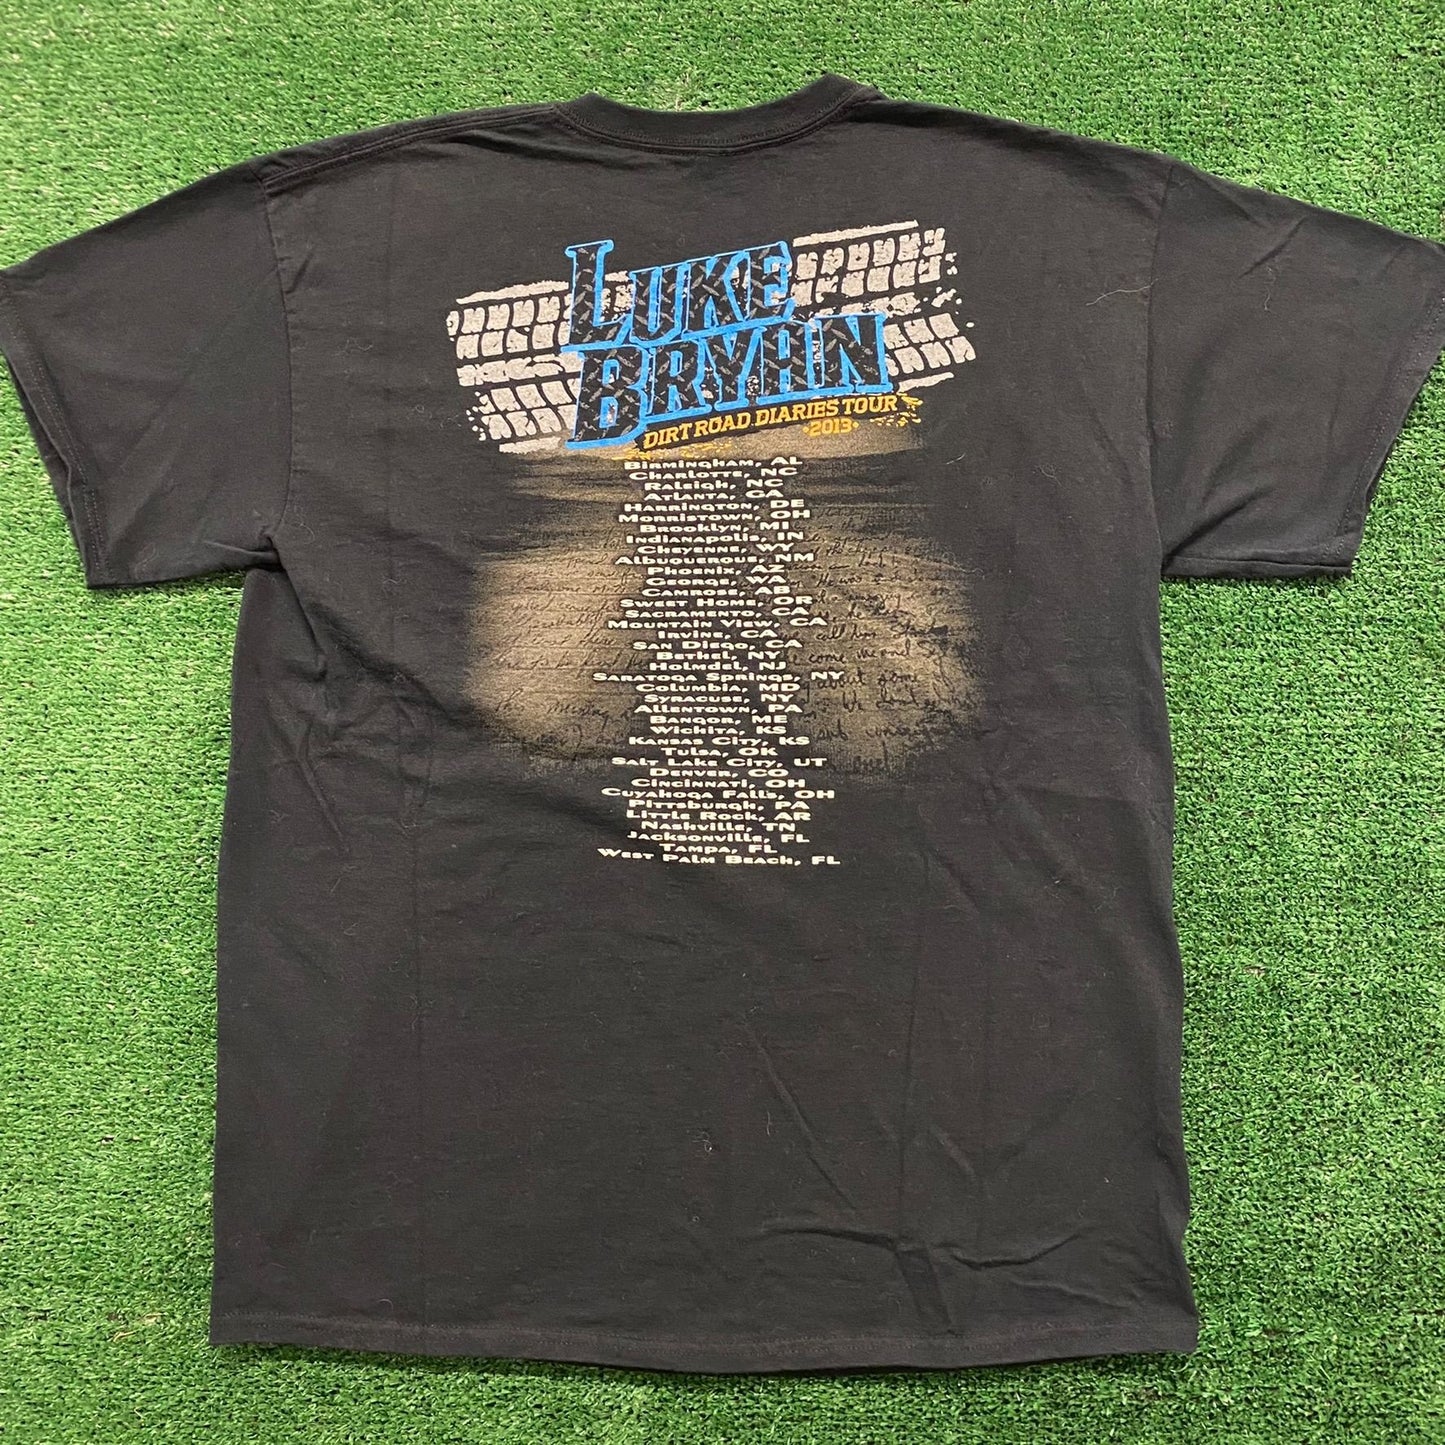 Luke Bryan Vintage Country Music T-Shirt